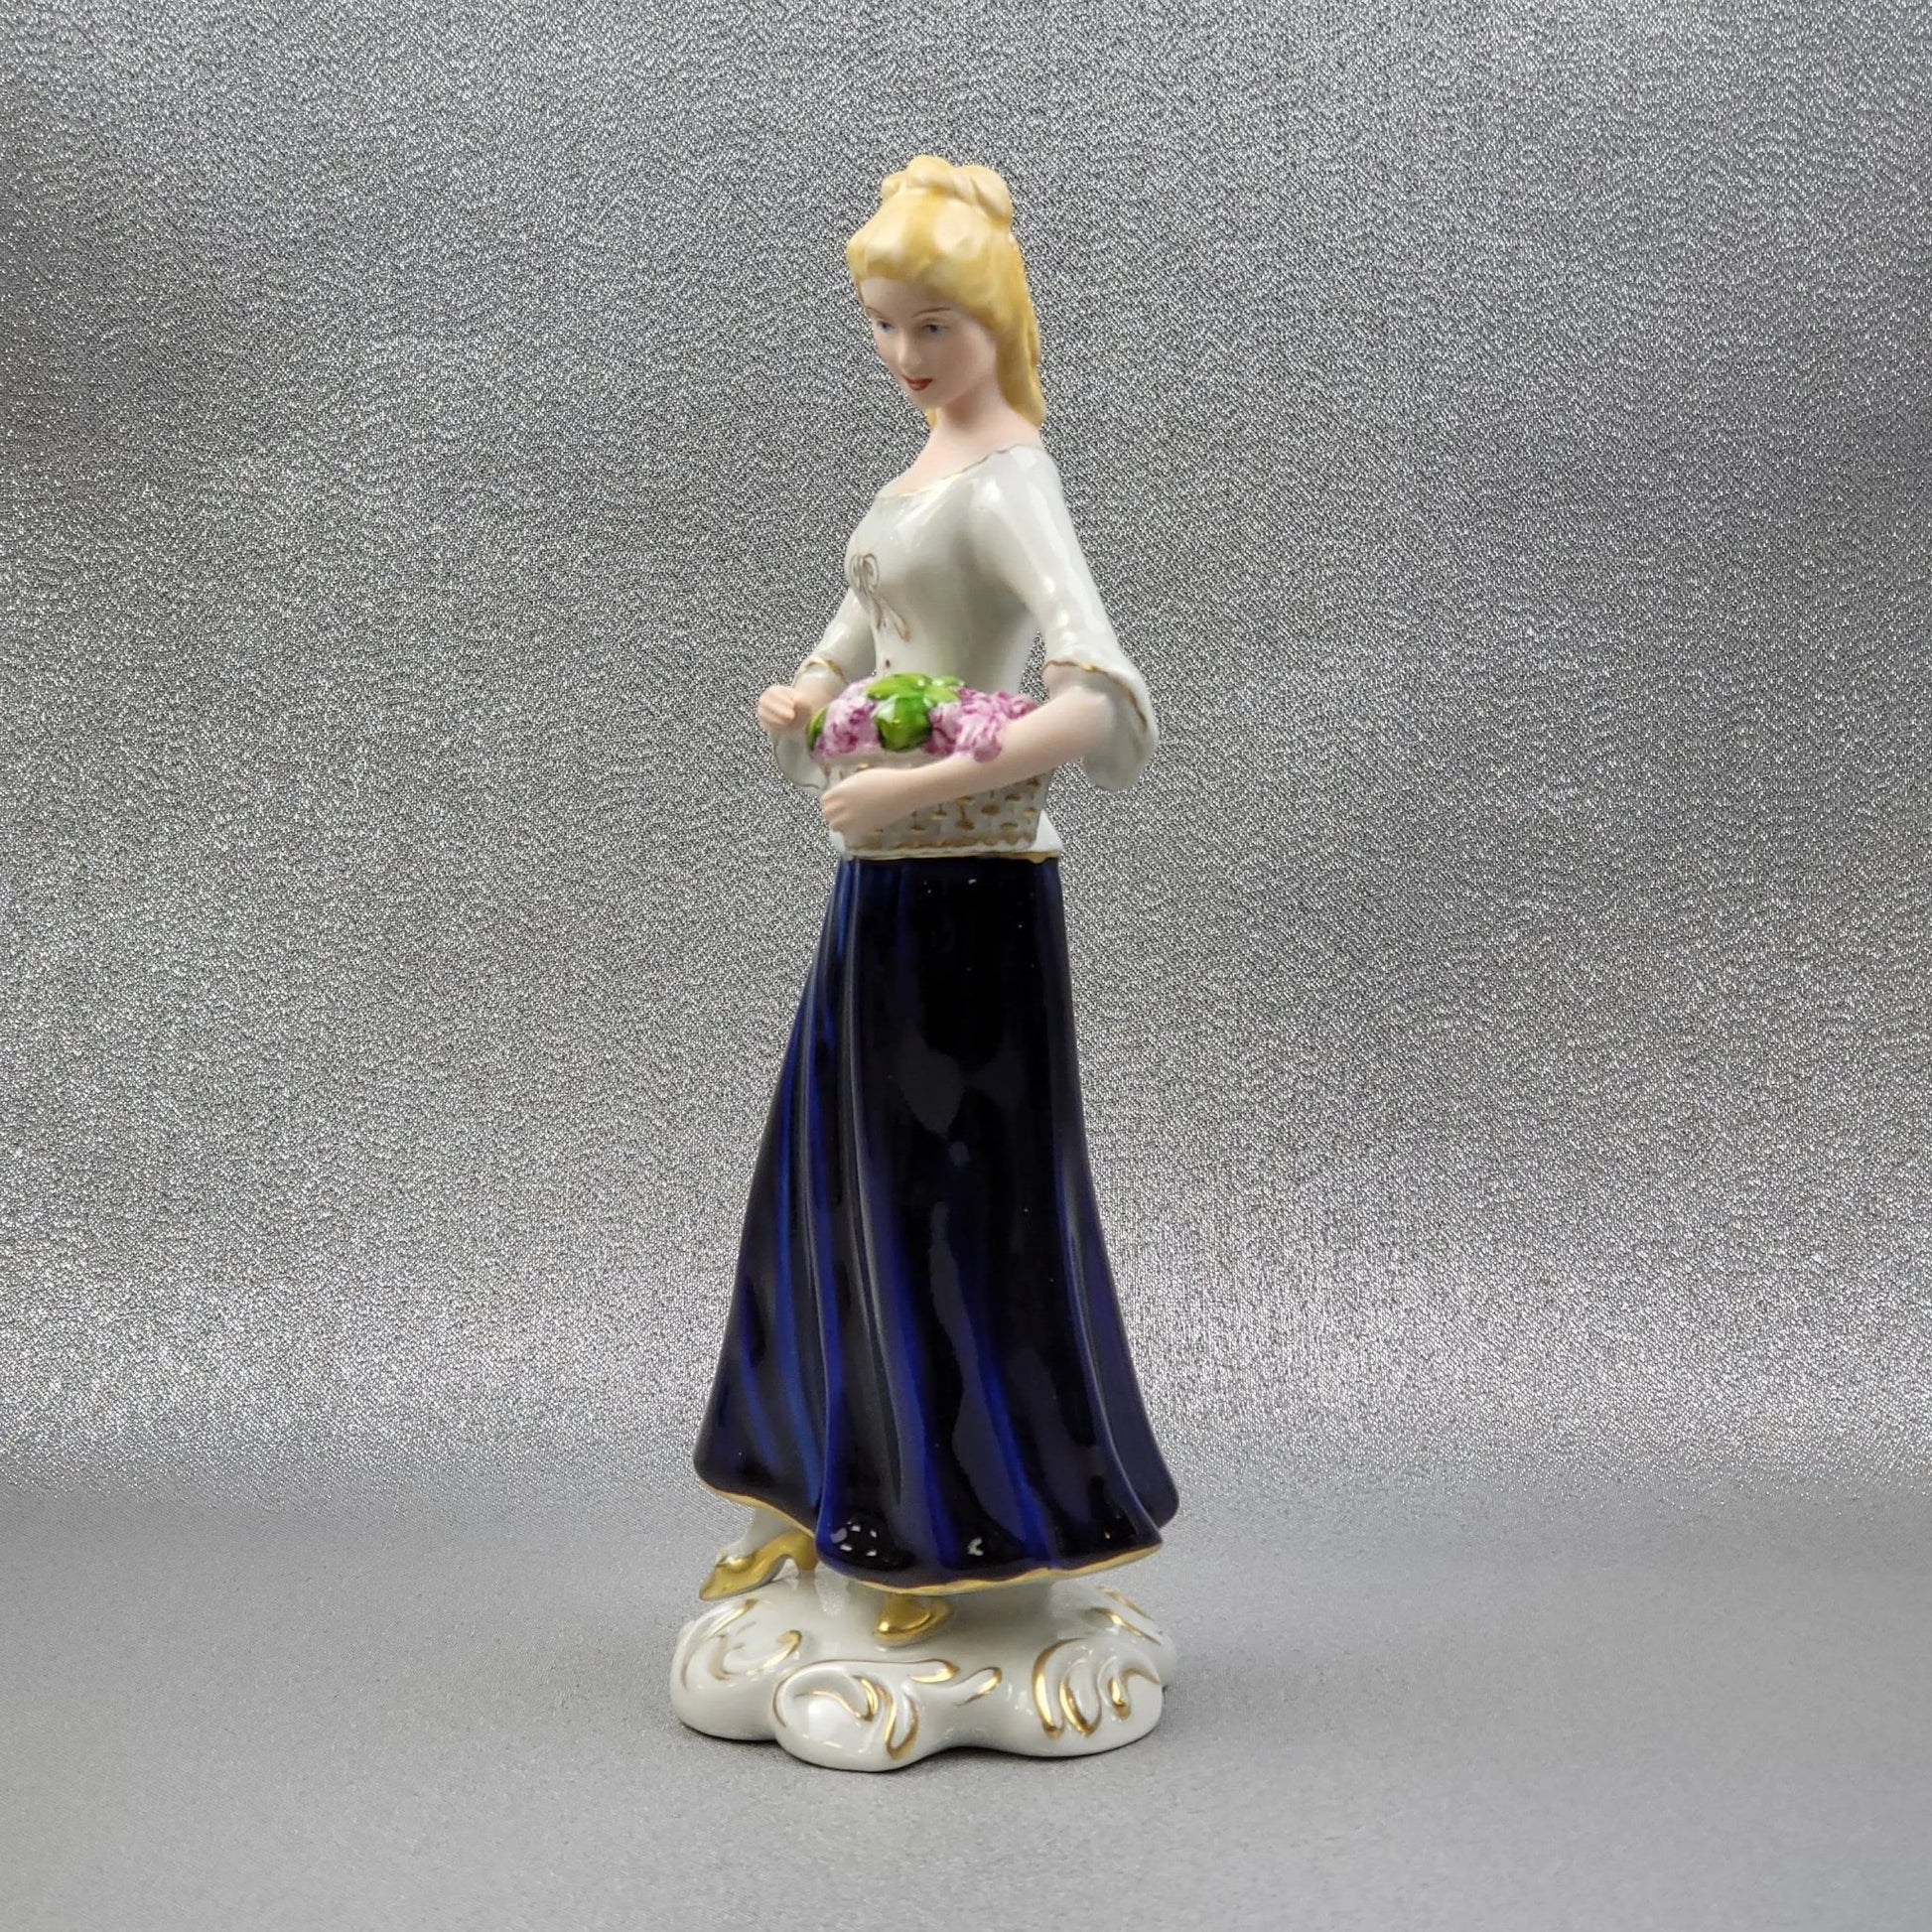 Porcelain figurine "Winemaker" by Royal Dux Bohemia.